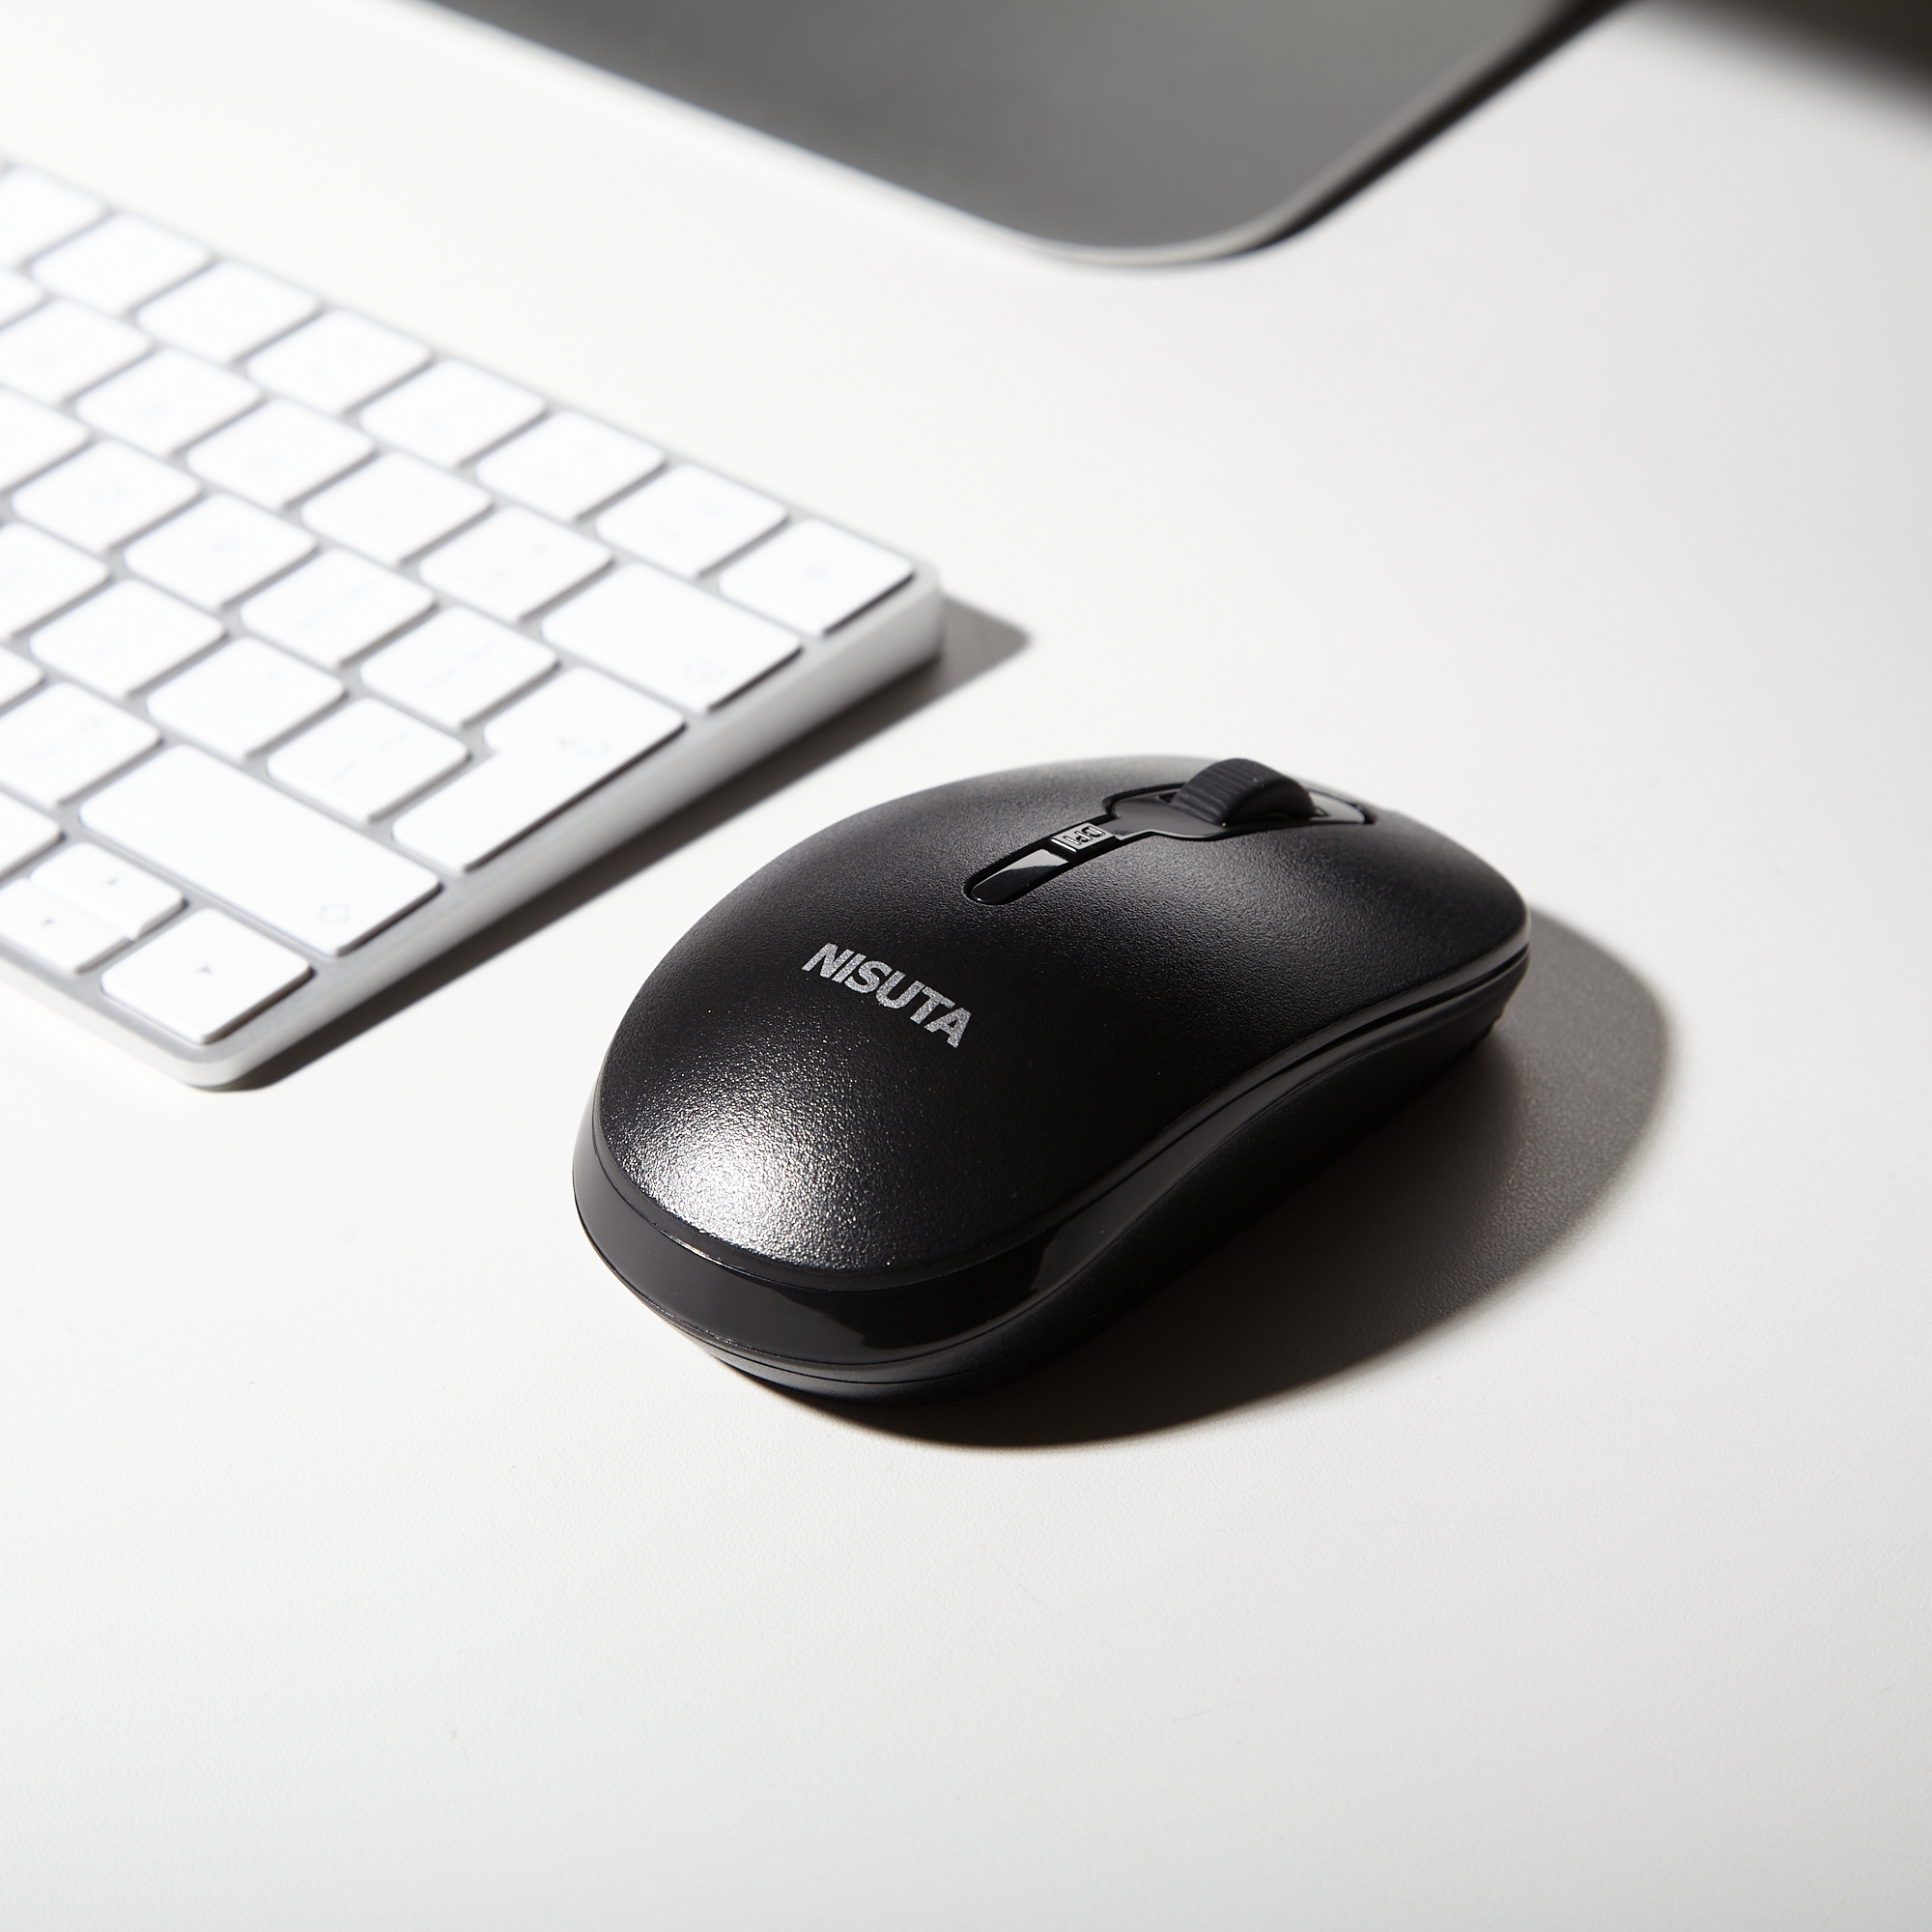 onn mouse drivers mac button function